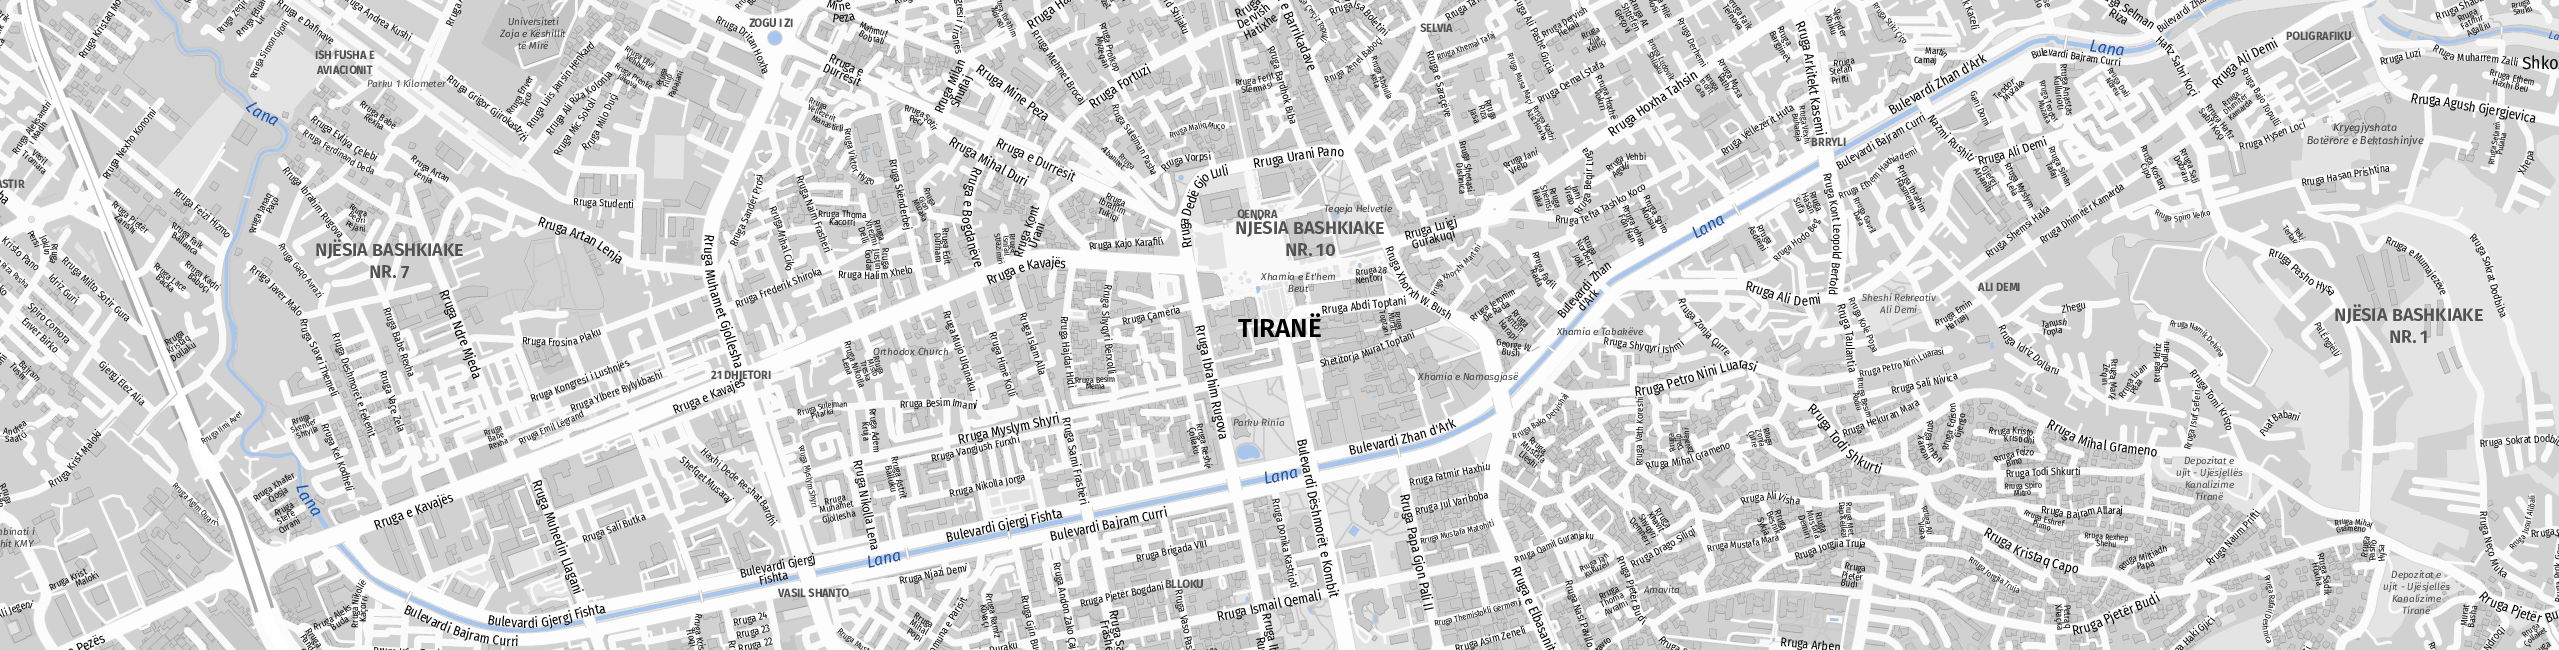 Stadtplan Tirana zum Downloaden.